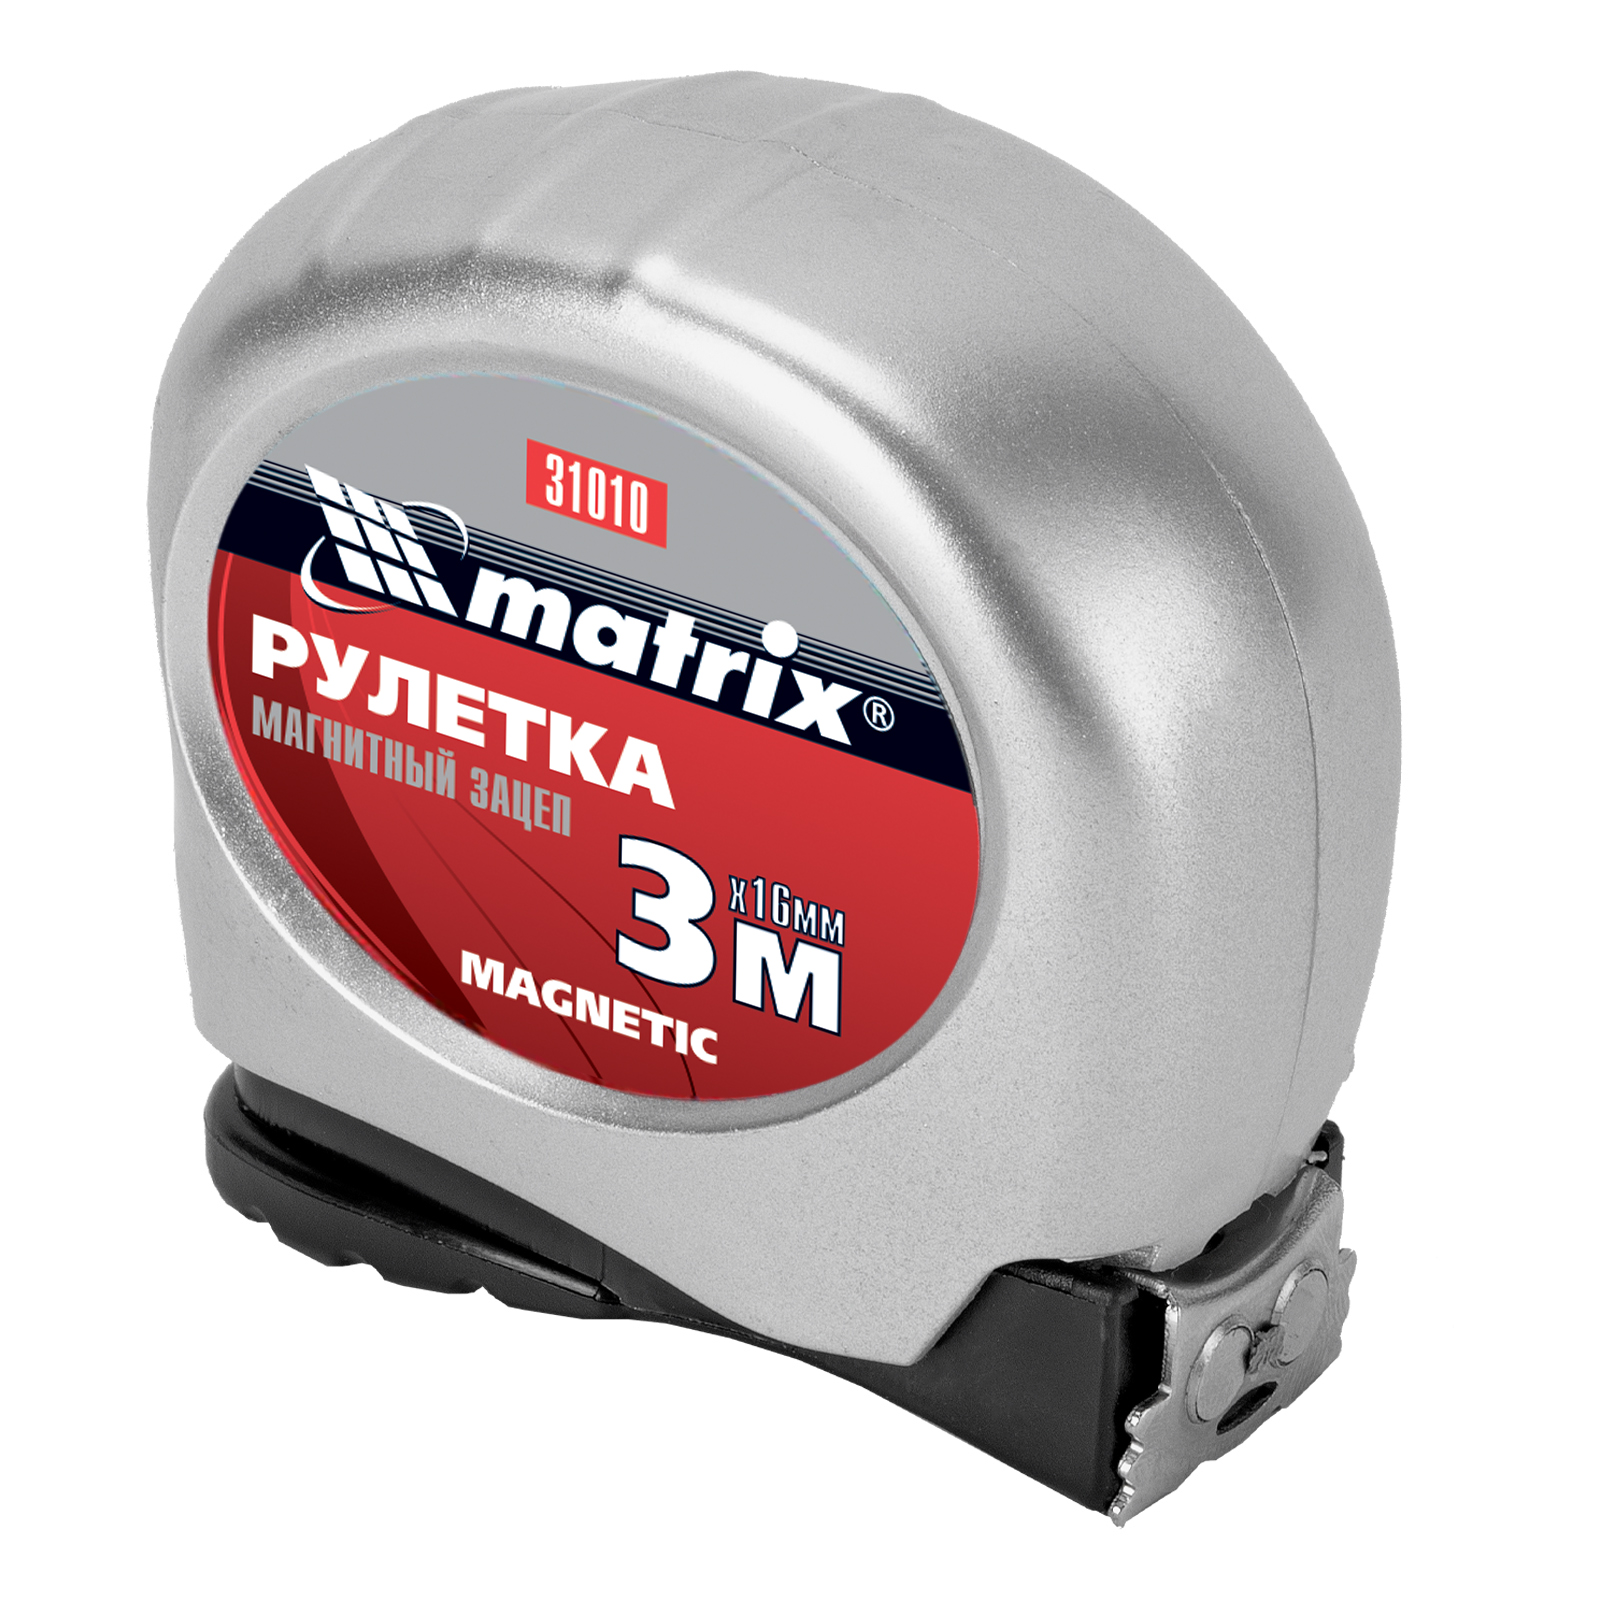 Рулетка MATRIX Magnetic 3мх16мм 31010 рулетка matrix status 3 fixations 3мх16мм 31033